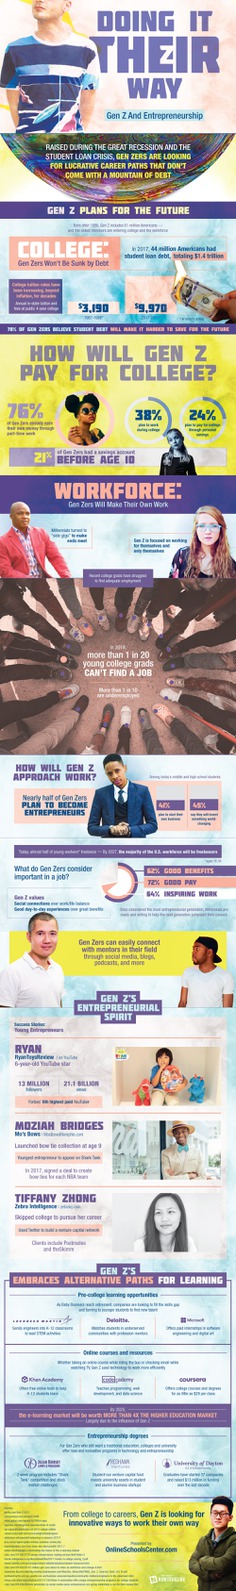 Gen-Z Entrepreneurship - will the younger generation lead the way in entrepreneurship?